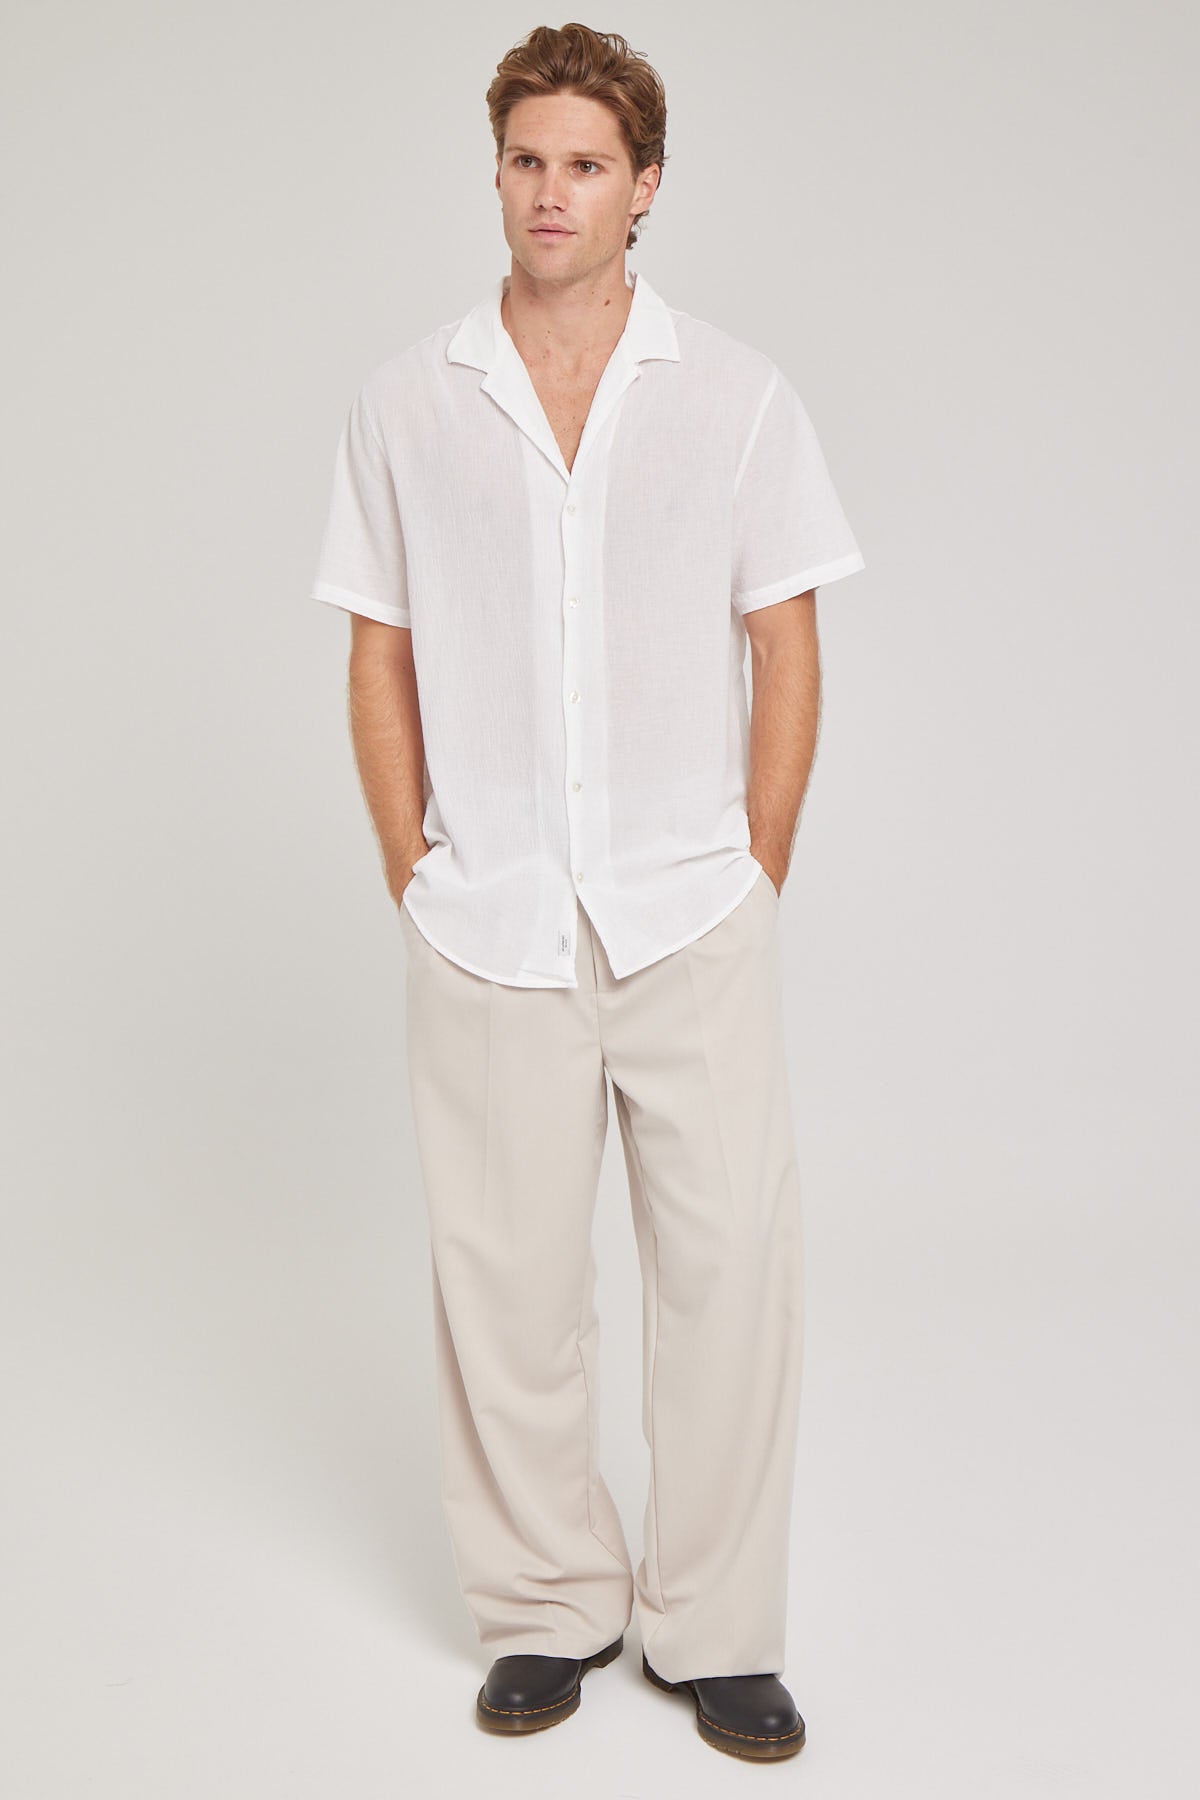 Academy Brand Bedford Shirt White